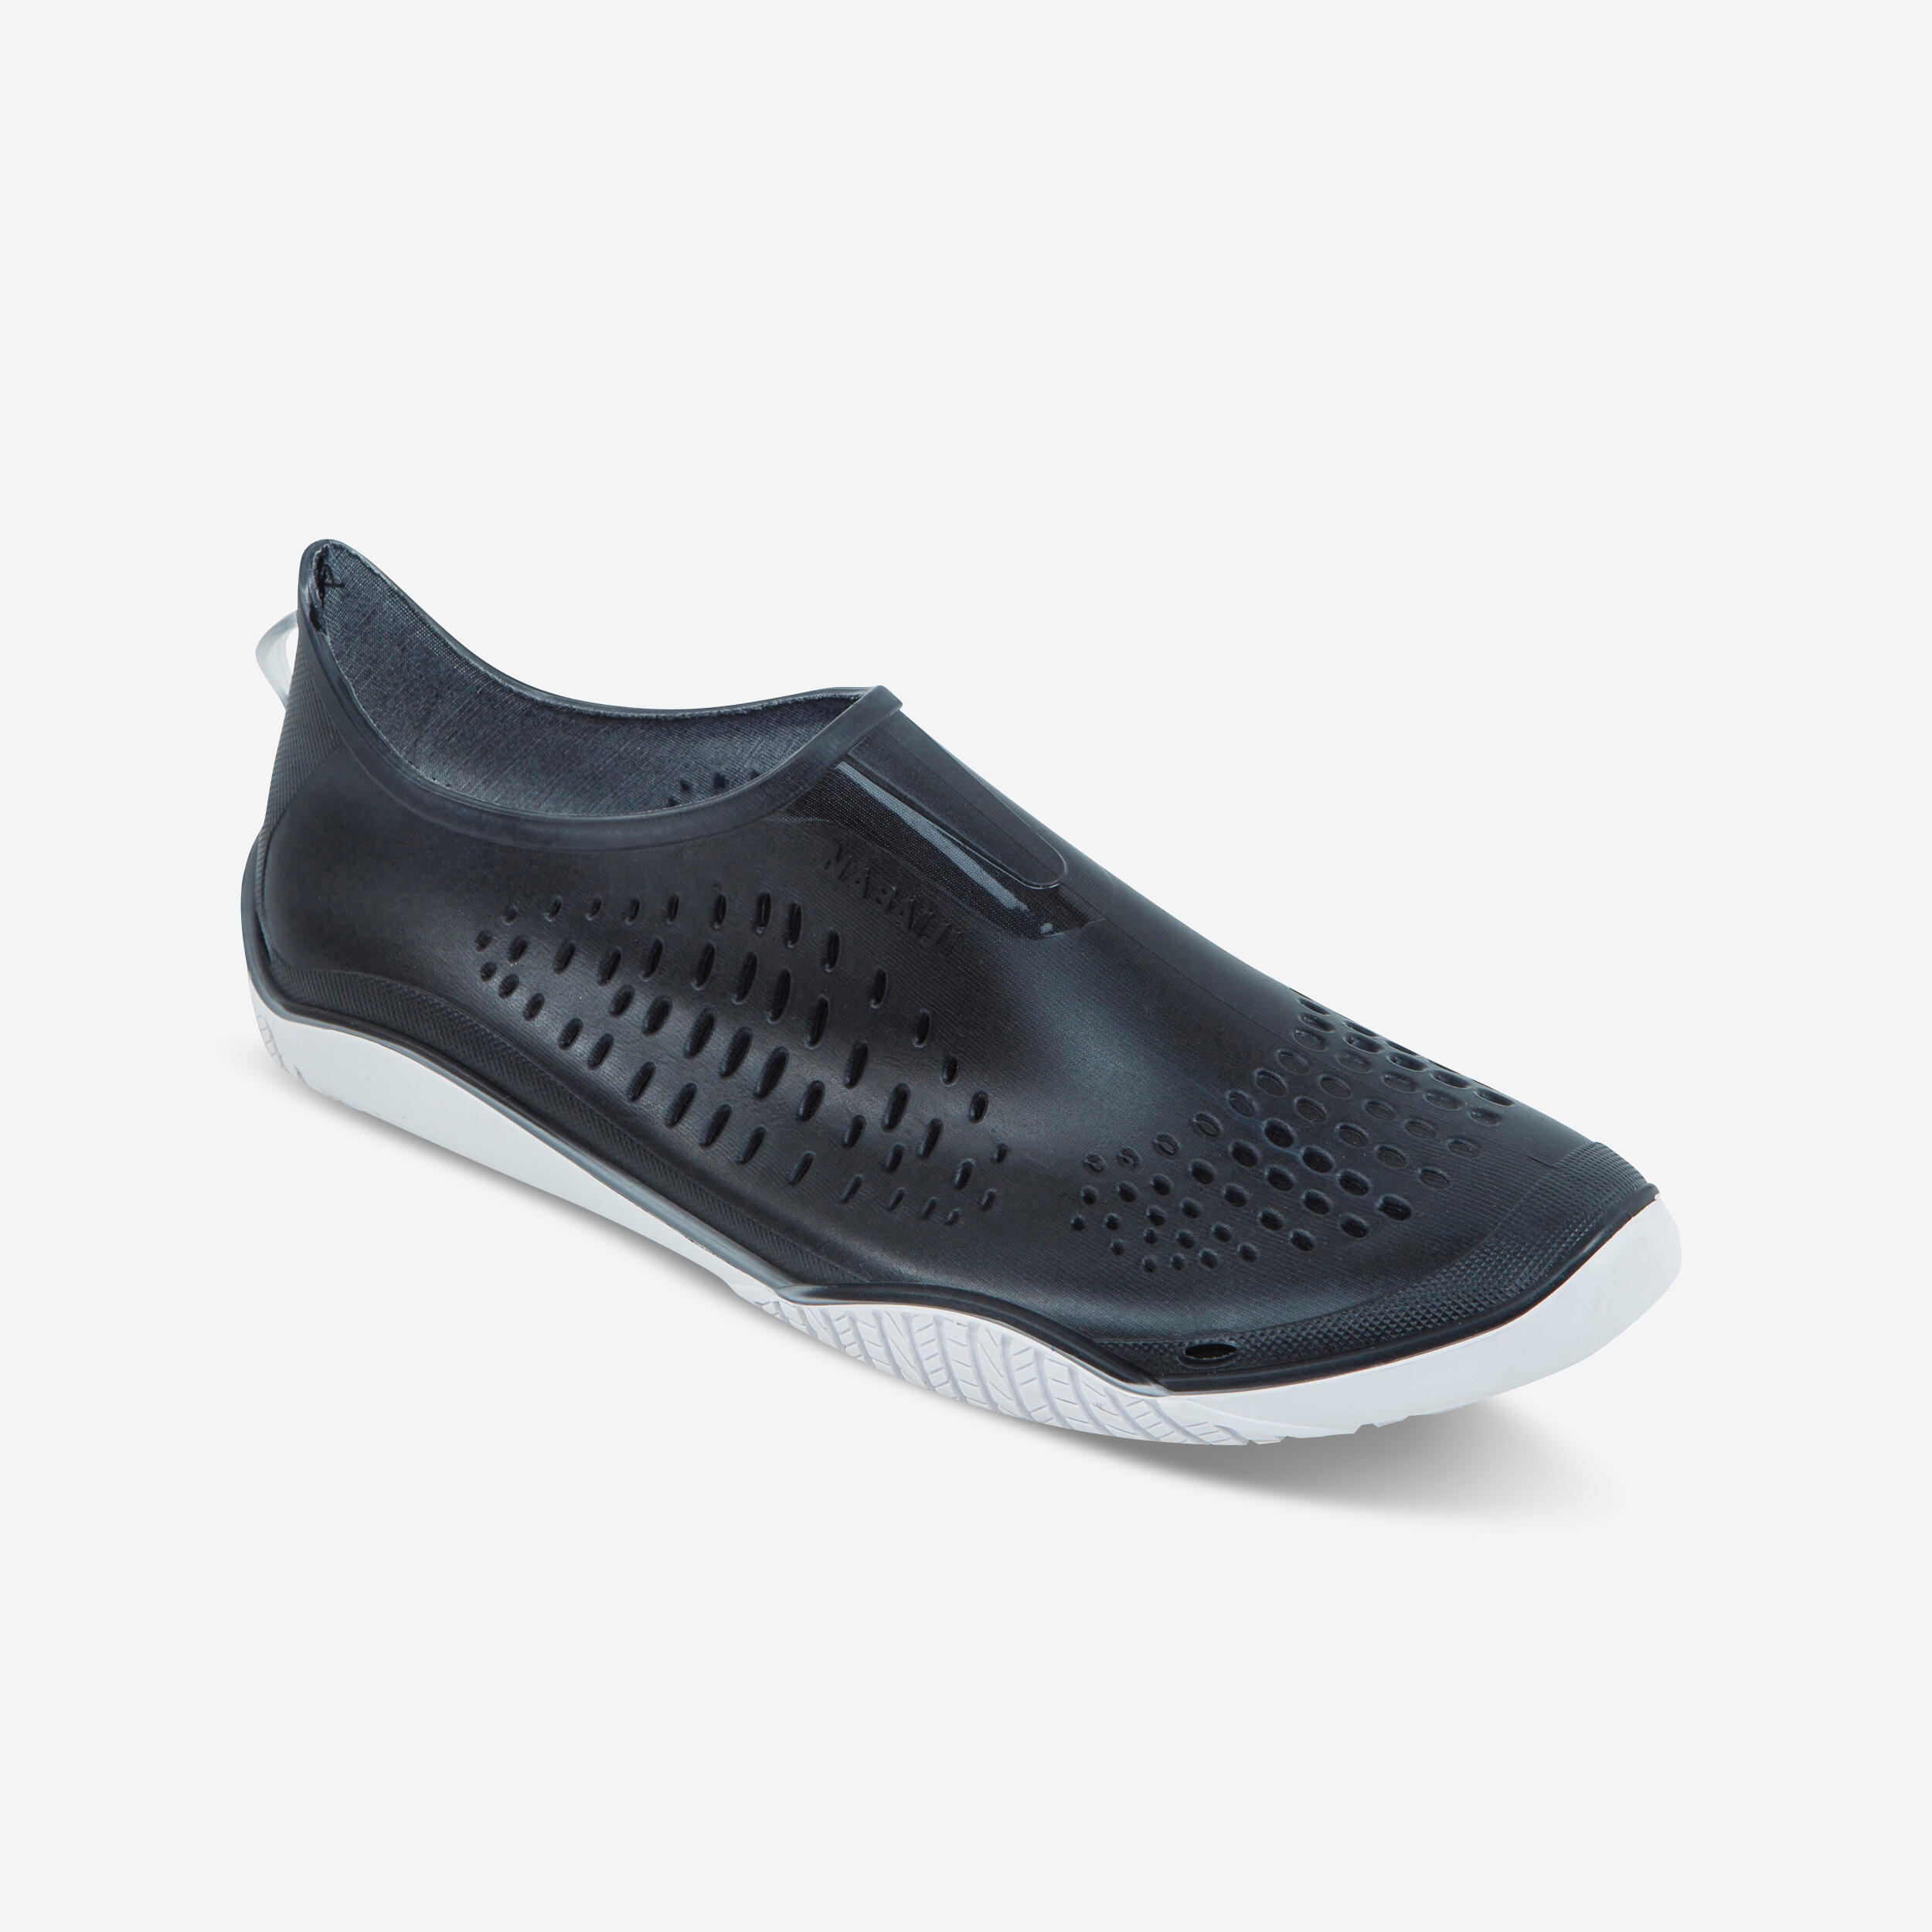 Aquabiking-Aquafit Water Shoes Fitshoe Black 4/8